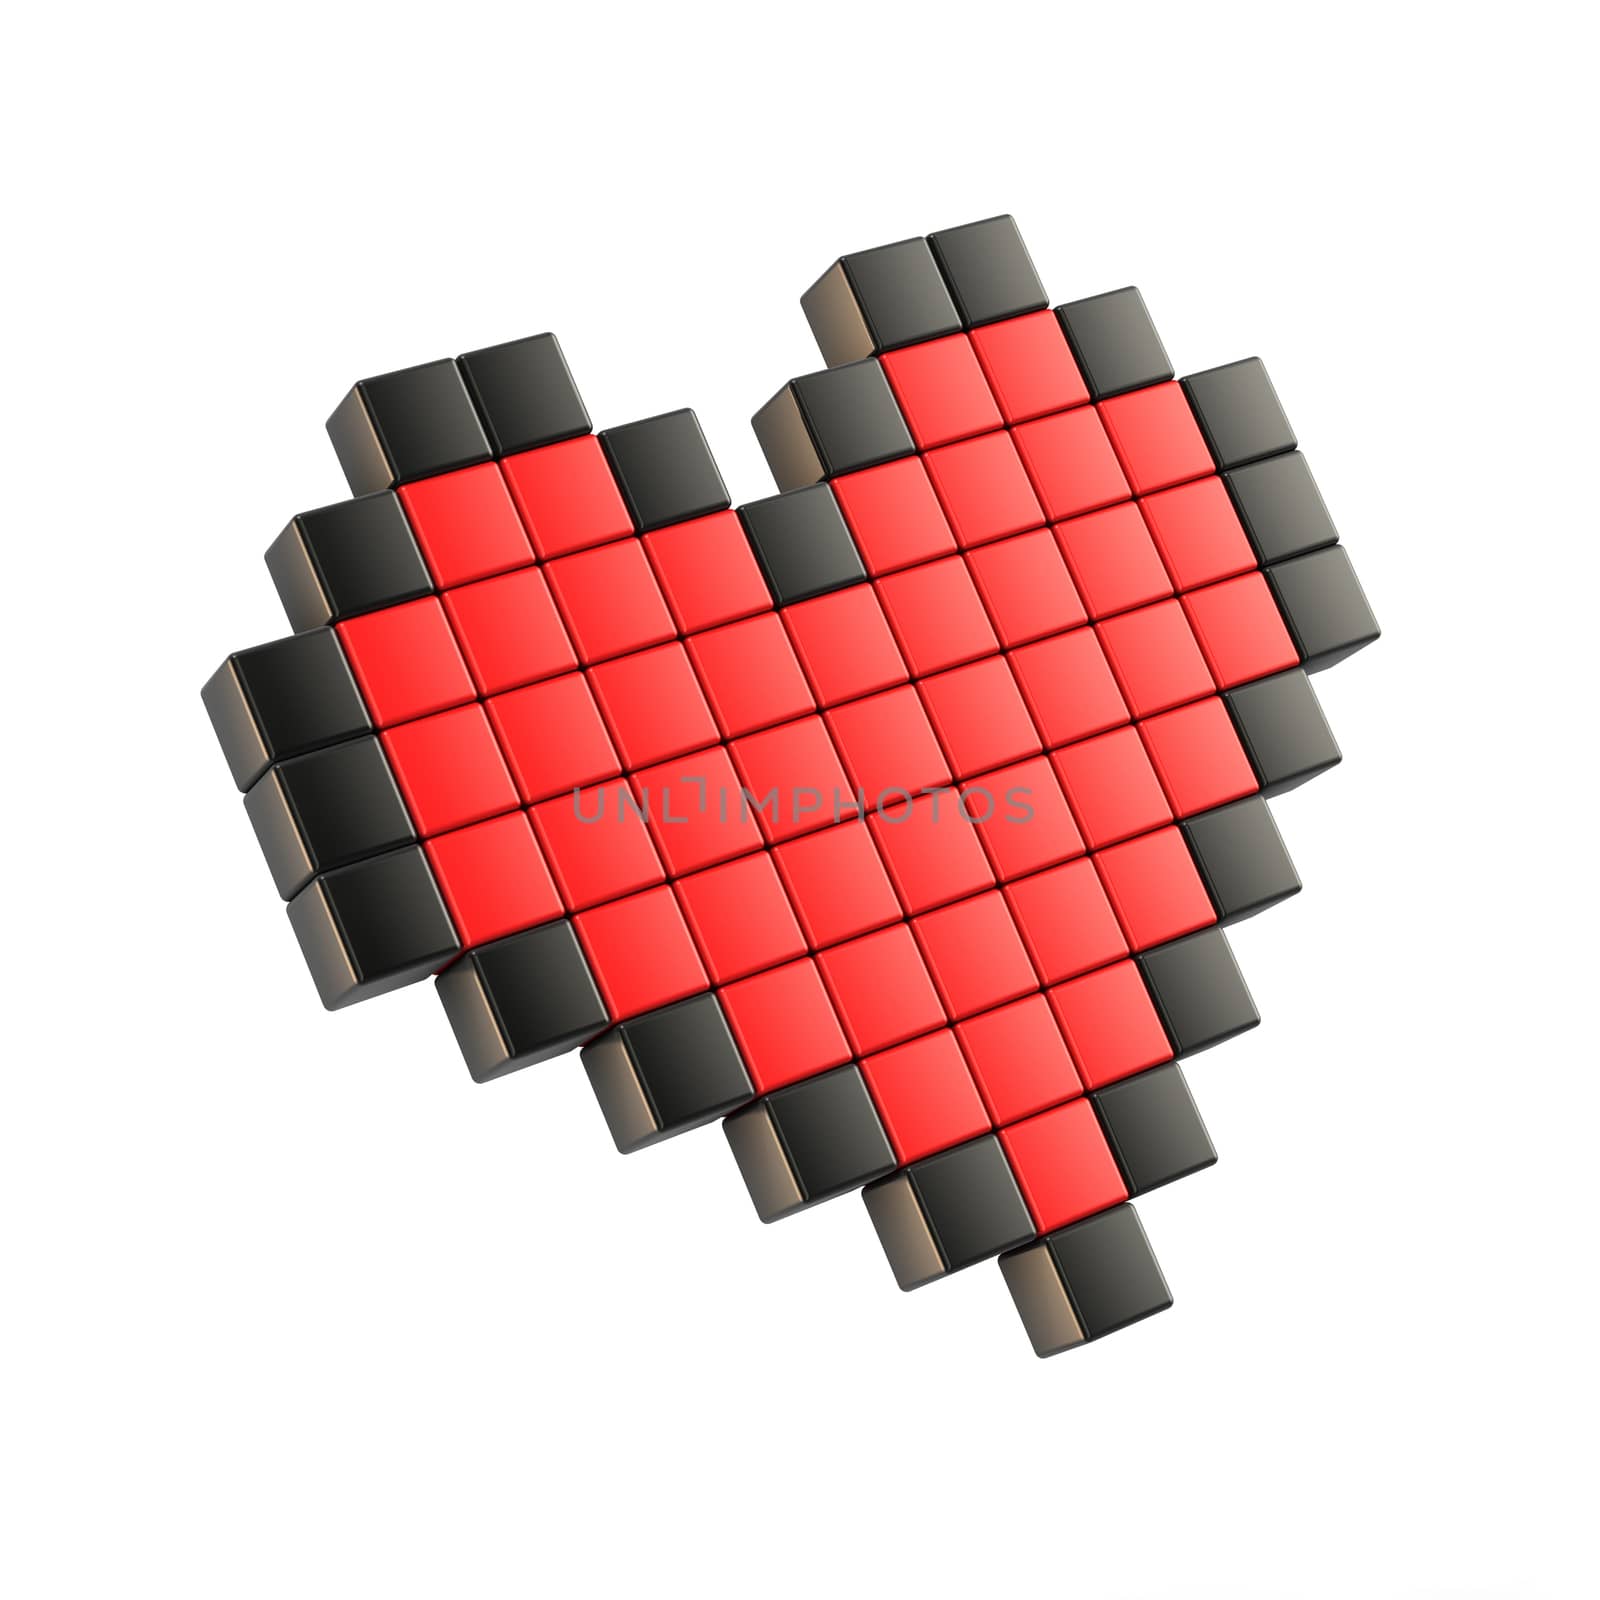 Red pixel heart. 3D by djmilic